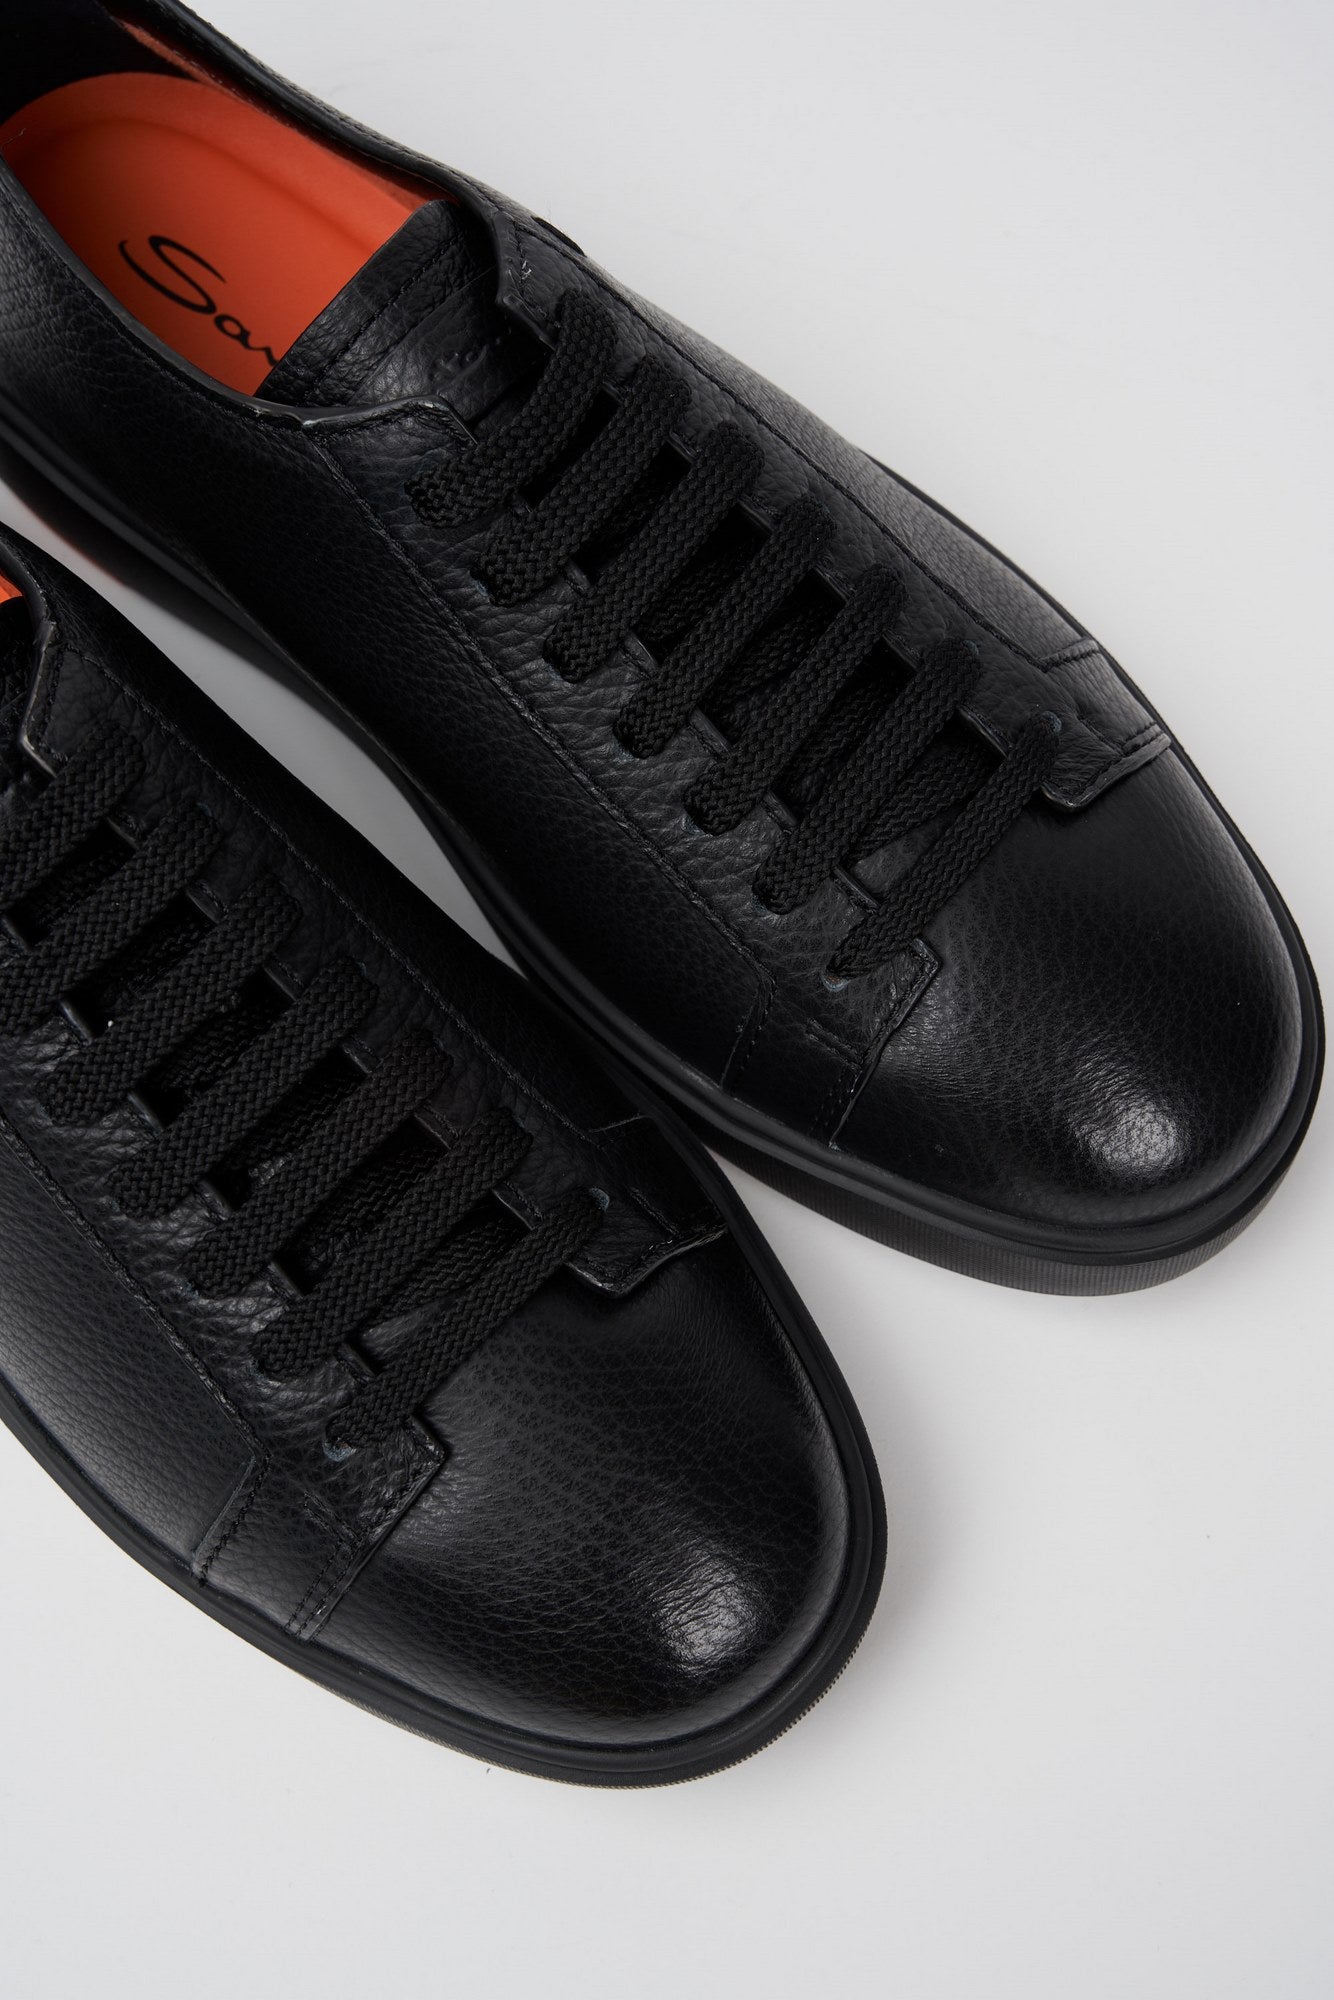 Santoni Leather Sneakers Black-3